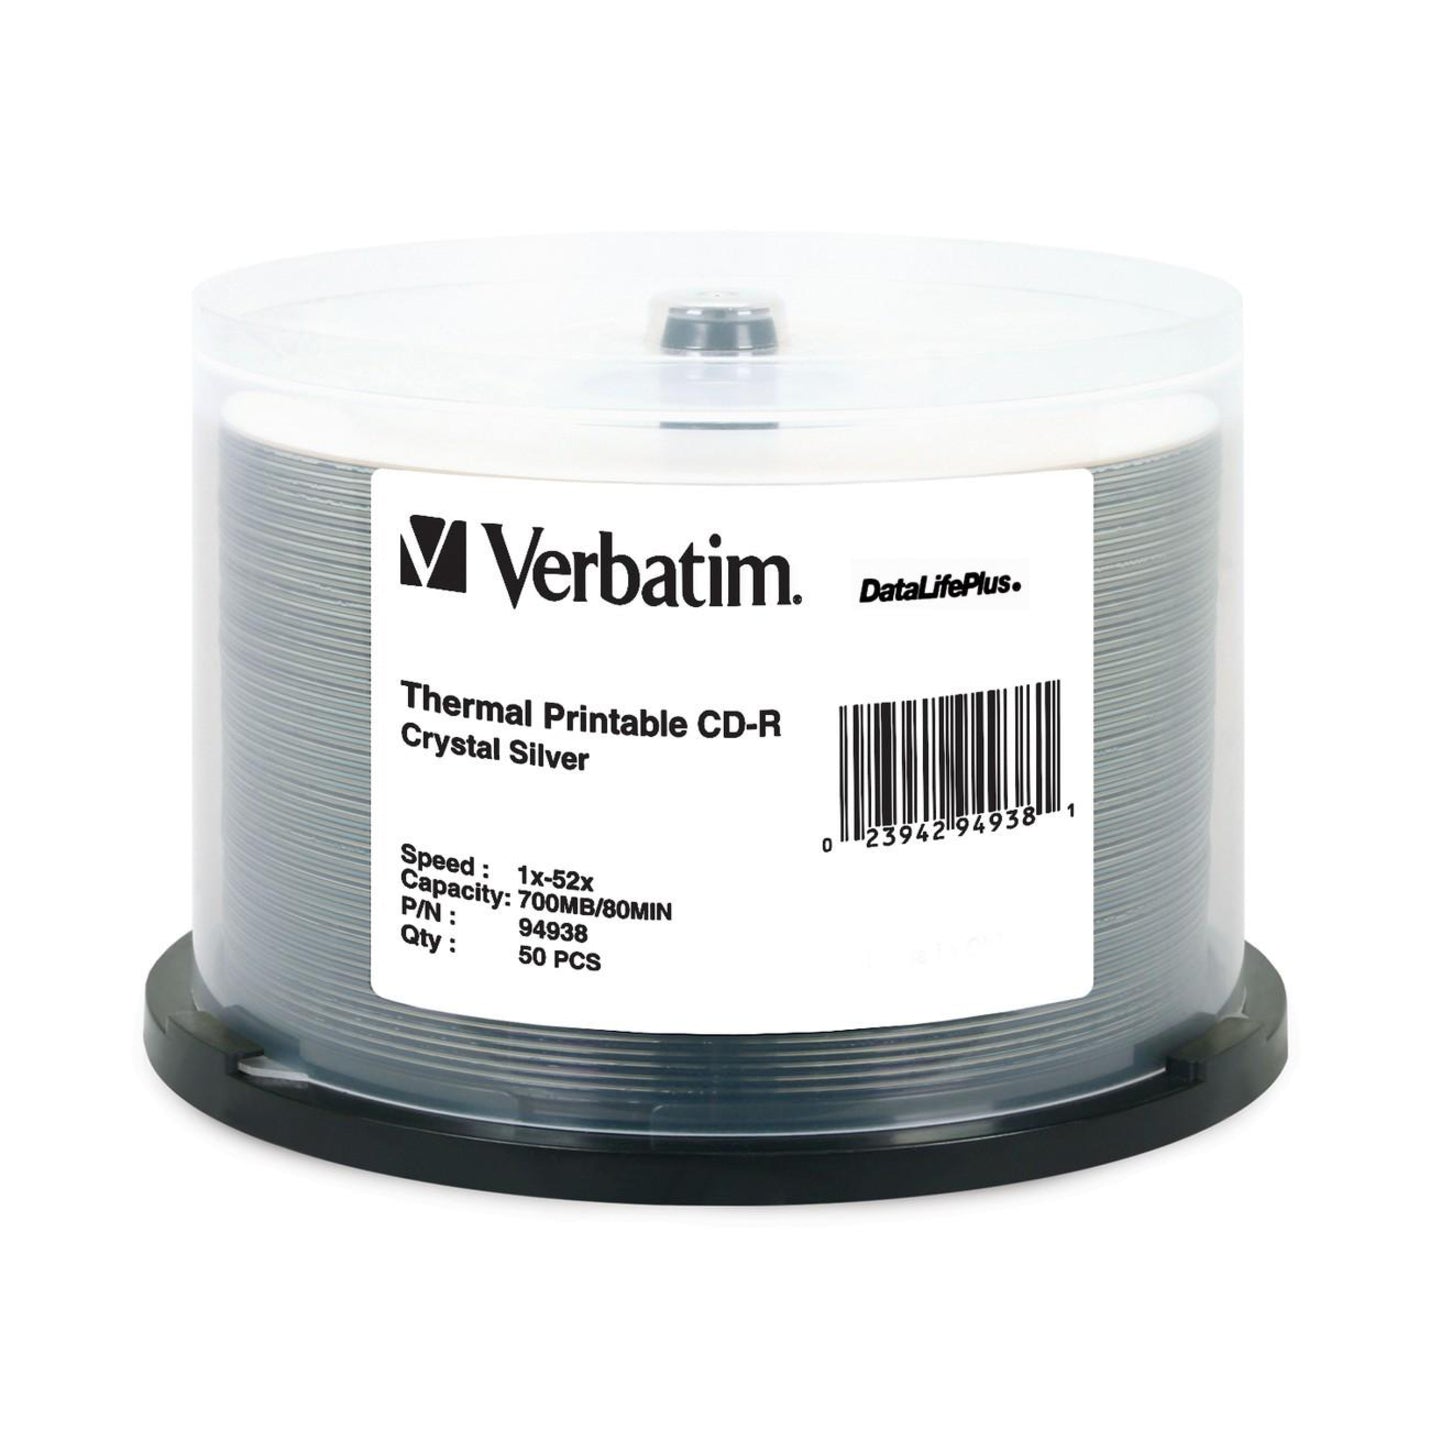 Verbatim 94938 CD-R 80MIN 700MB 52x DataLifePlus, Crystal Thermal Printable 50pk Spindle